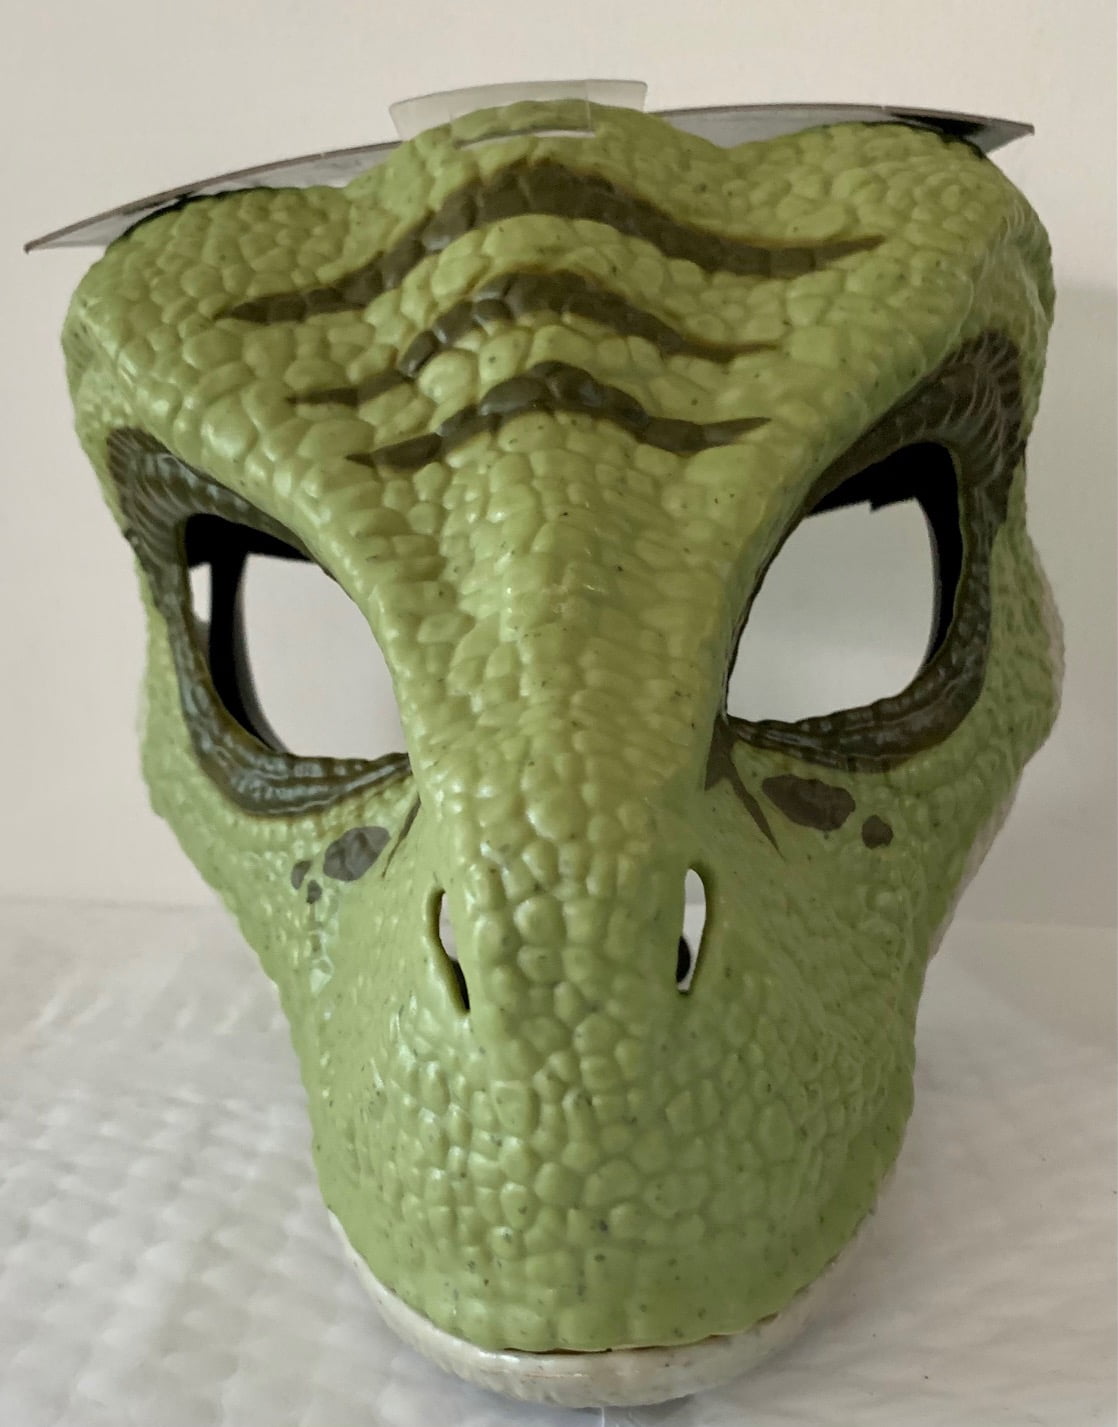 Jurassic World Villain Dino Mask 